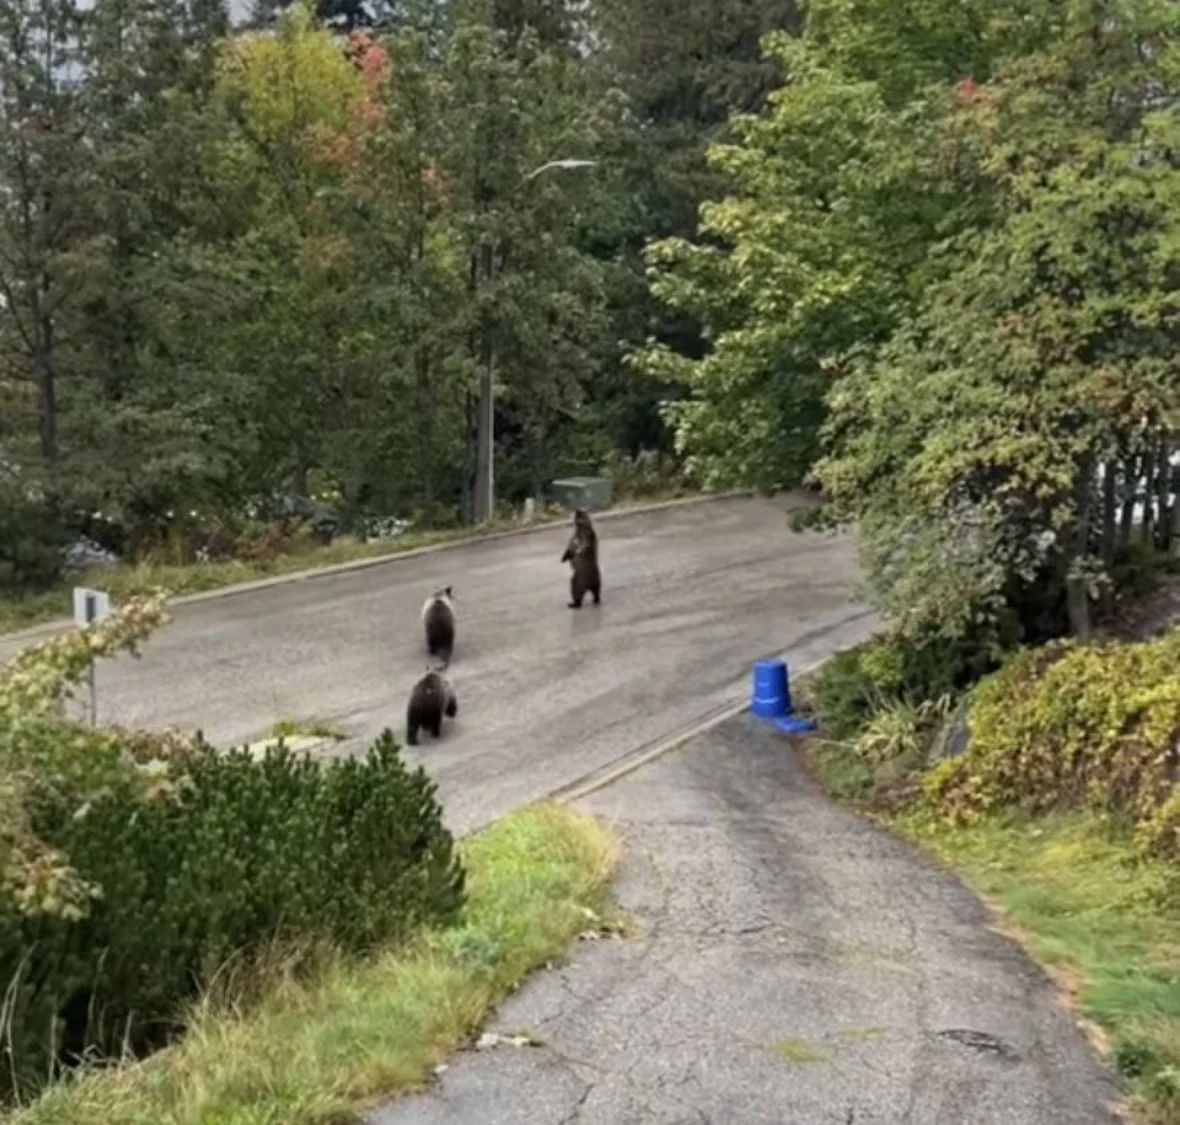 grizzly-family/Alii Simmonds via CBC